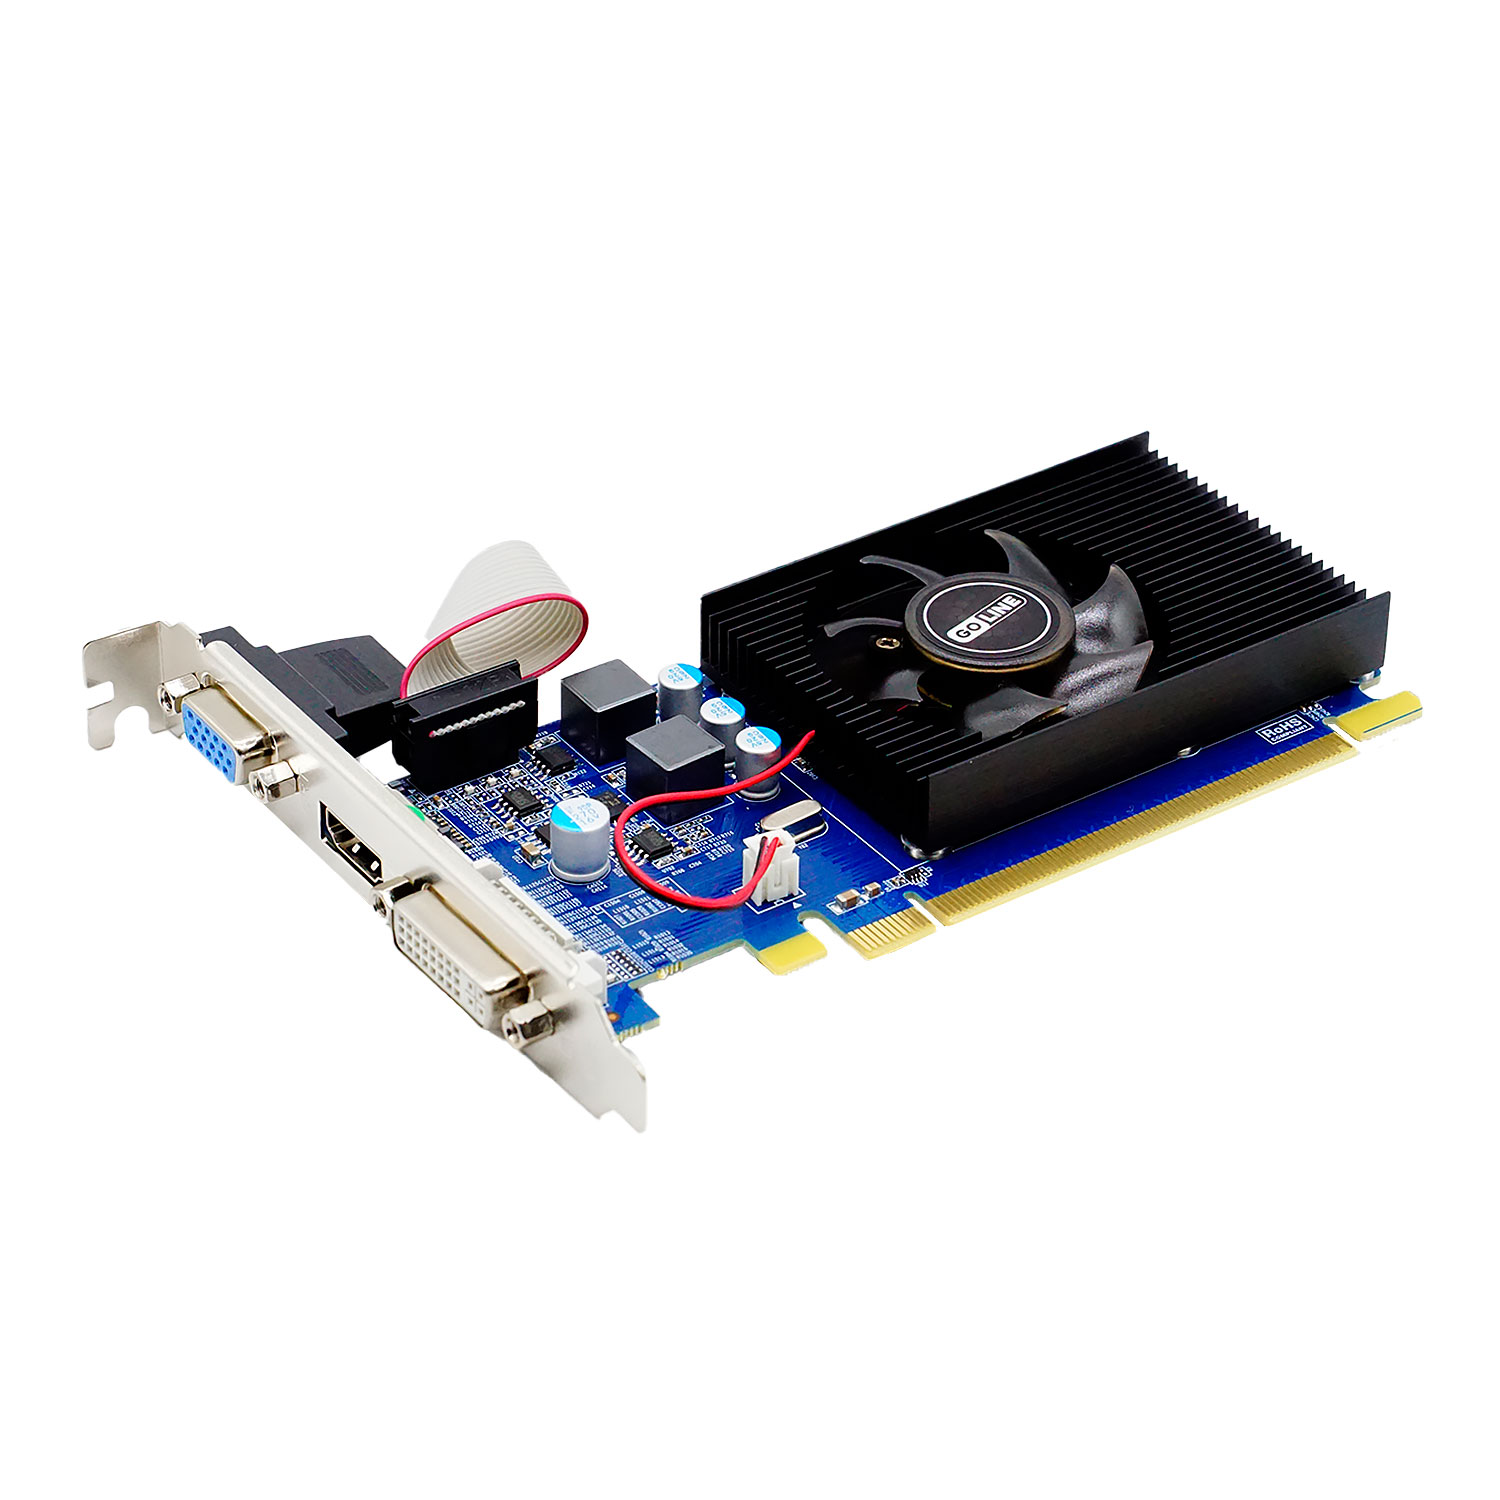 Placa de Vídeo Goline R5-230 AMD Radeon R5 230 1GB DDR3 - GL-R5-230-1GB-D3 (1 Ano de Garantia)